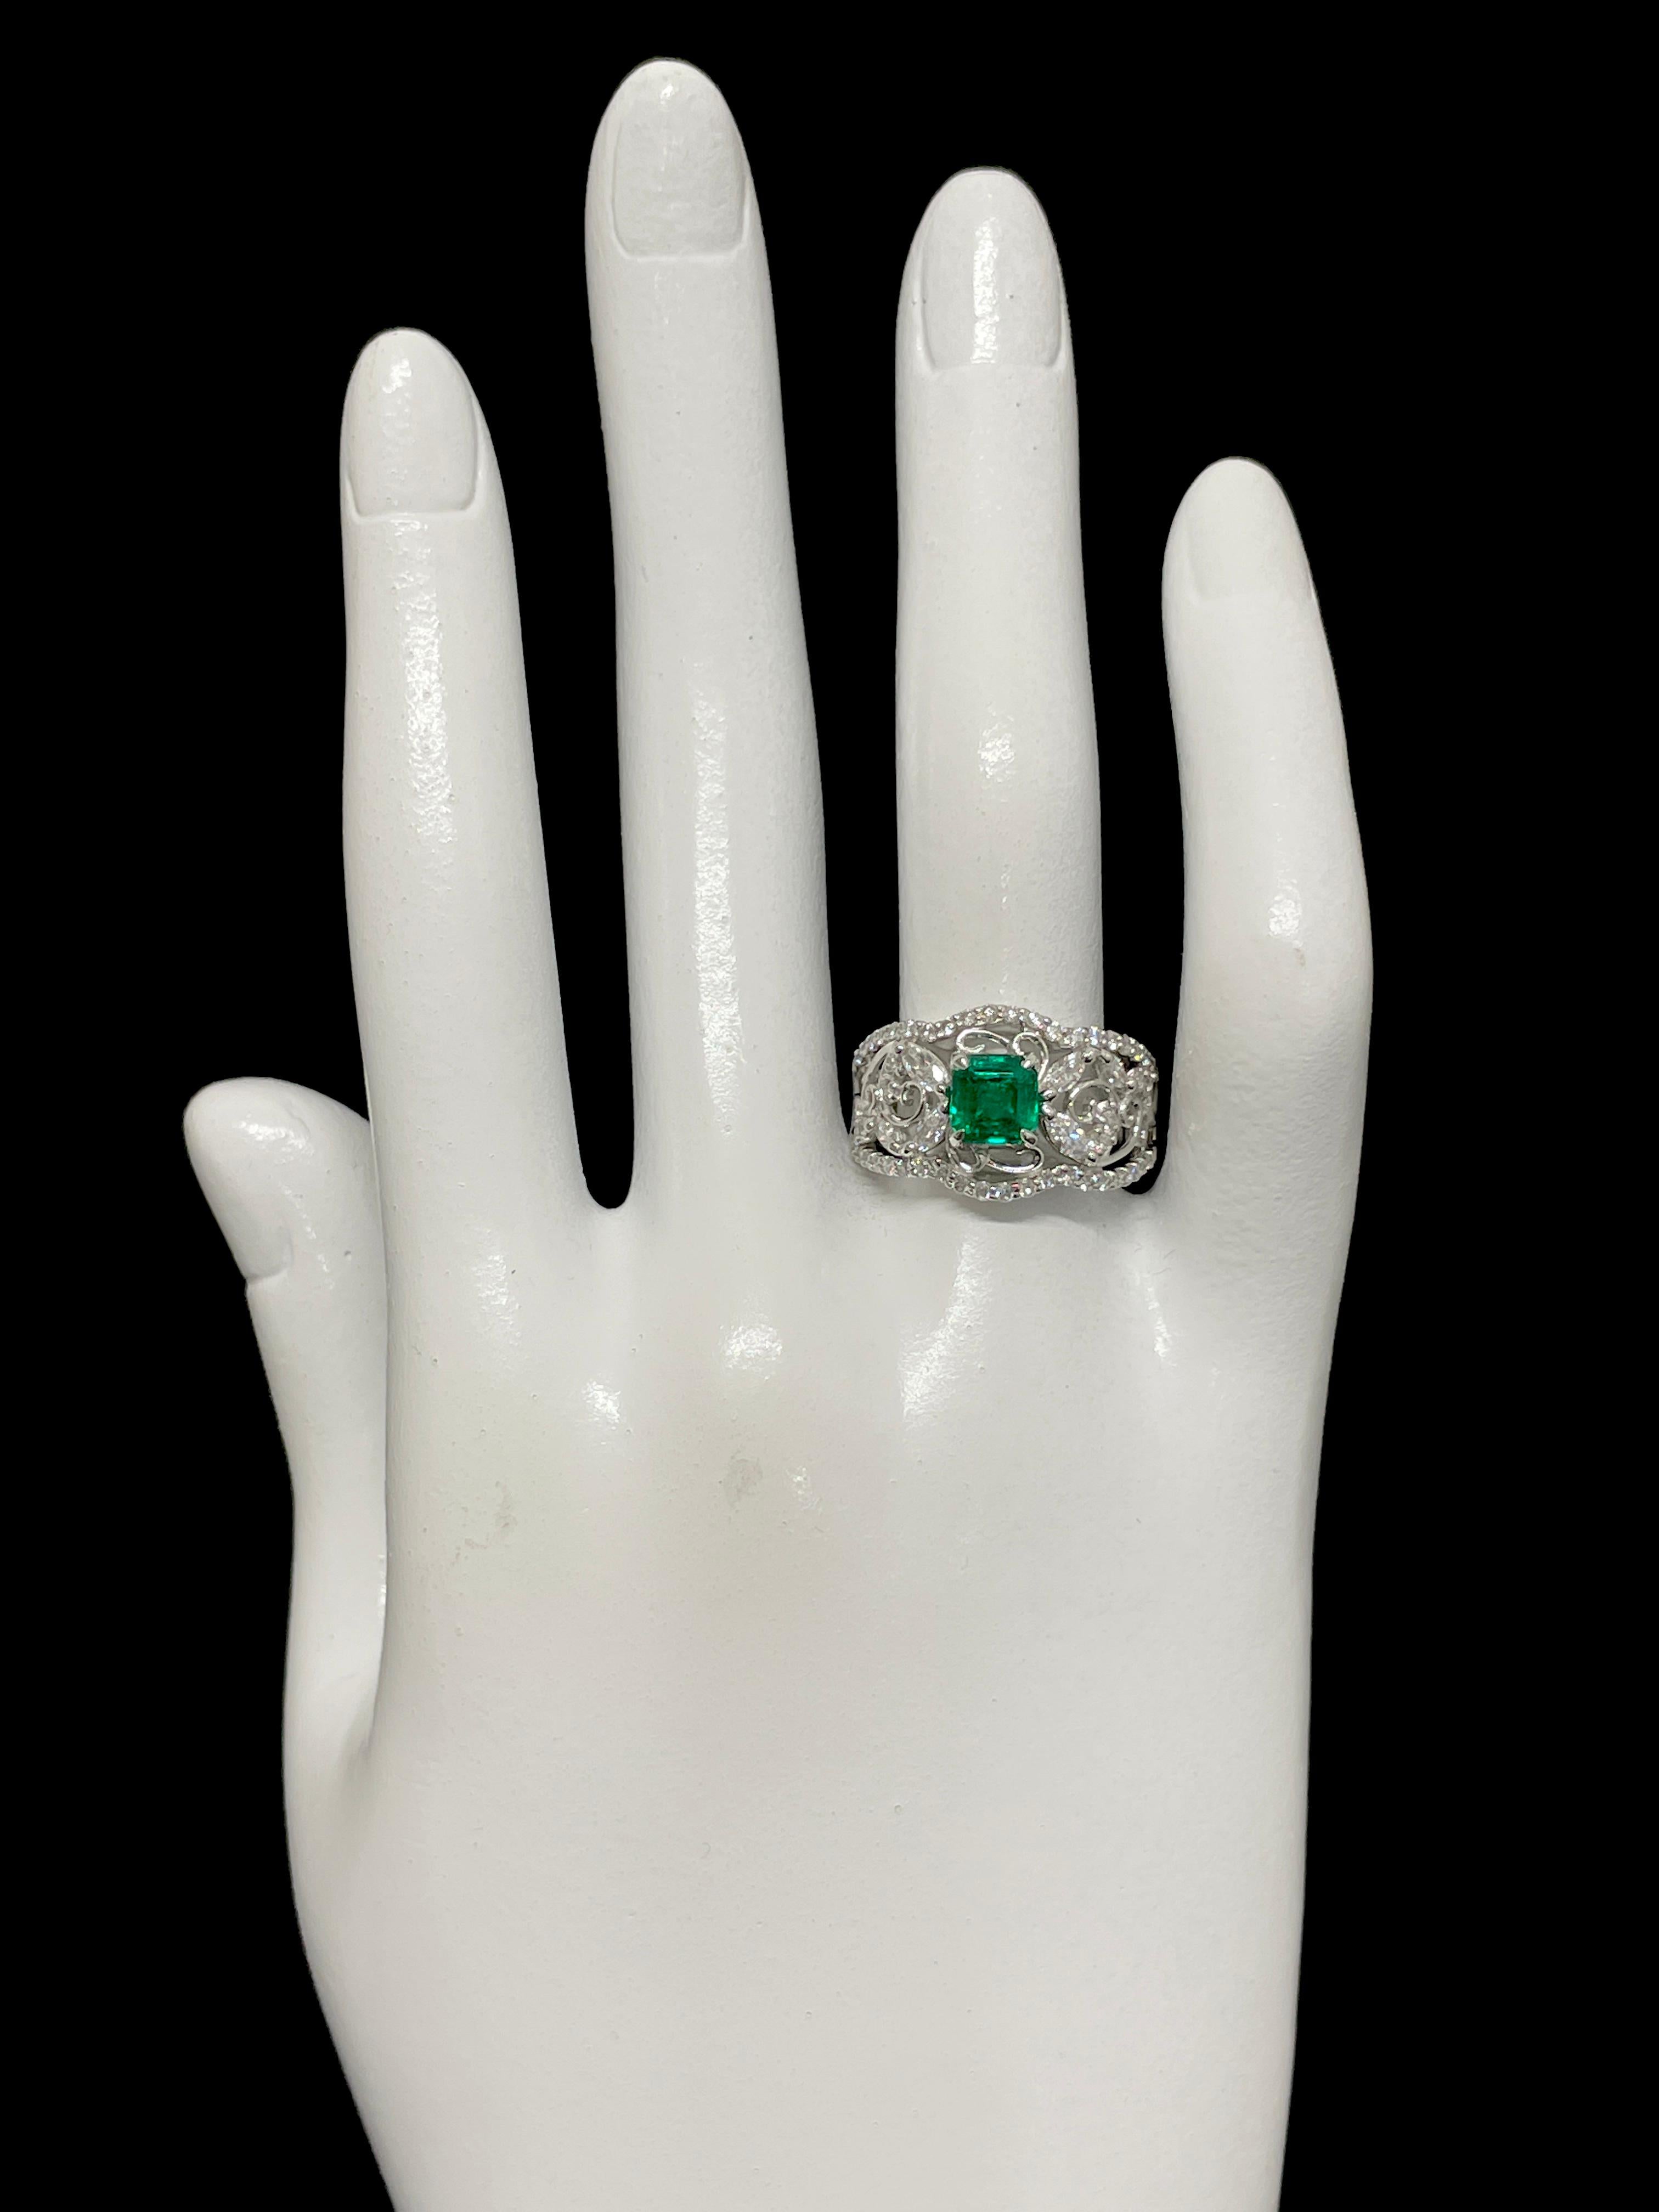 0.86 Carat Natural Vivid Green Emerald and Diamond Ring Set in Platinum 1